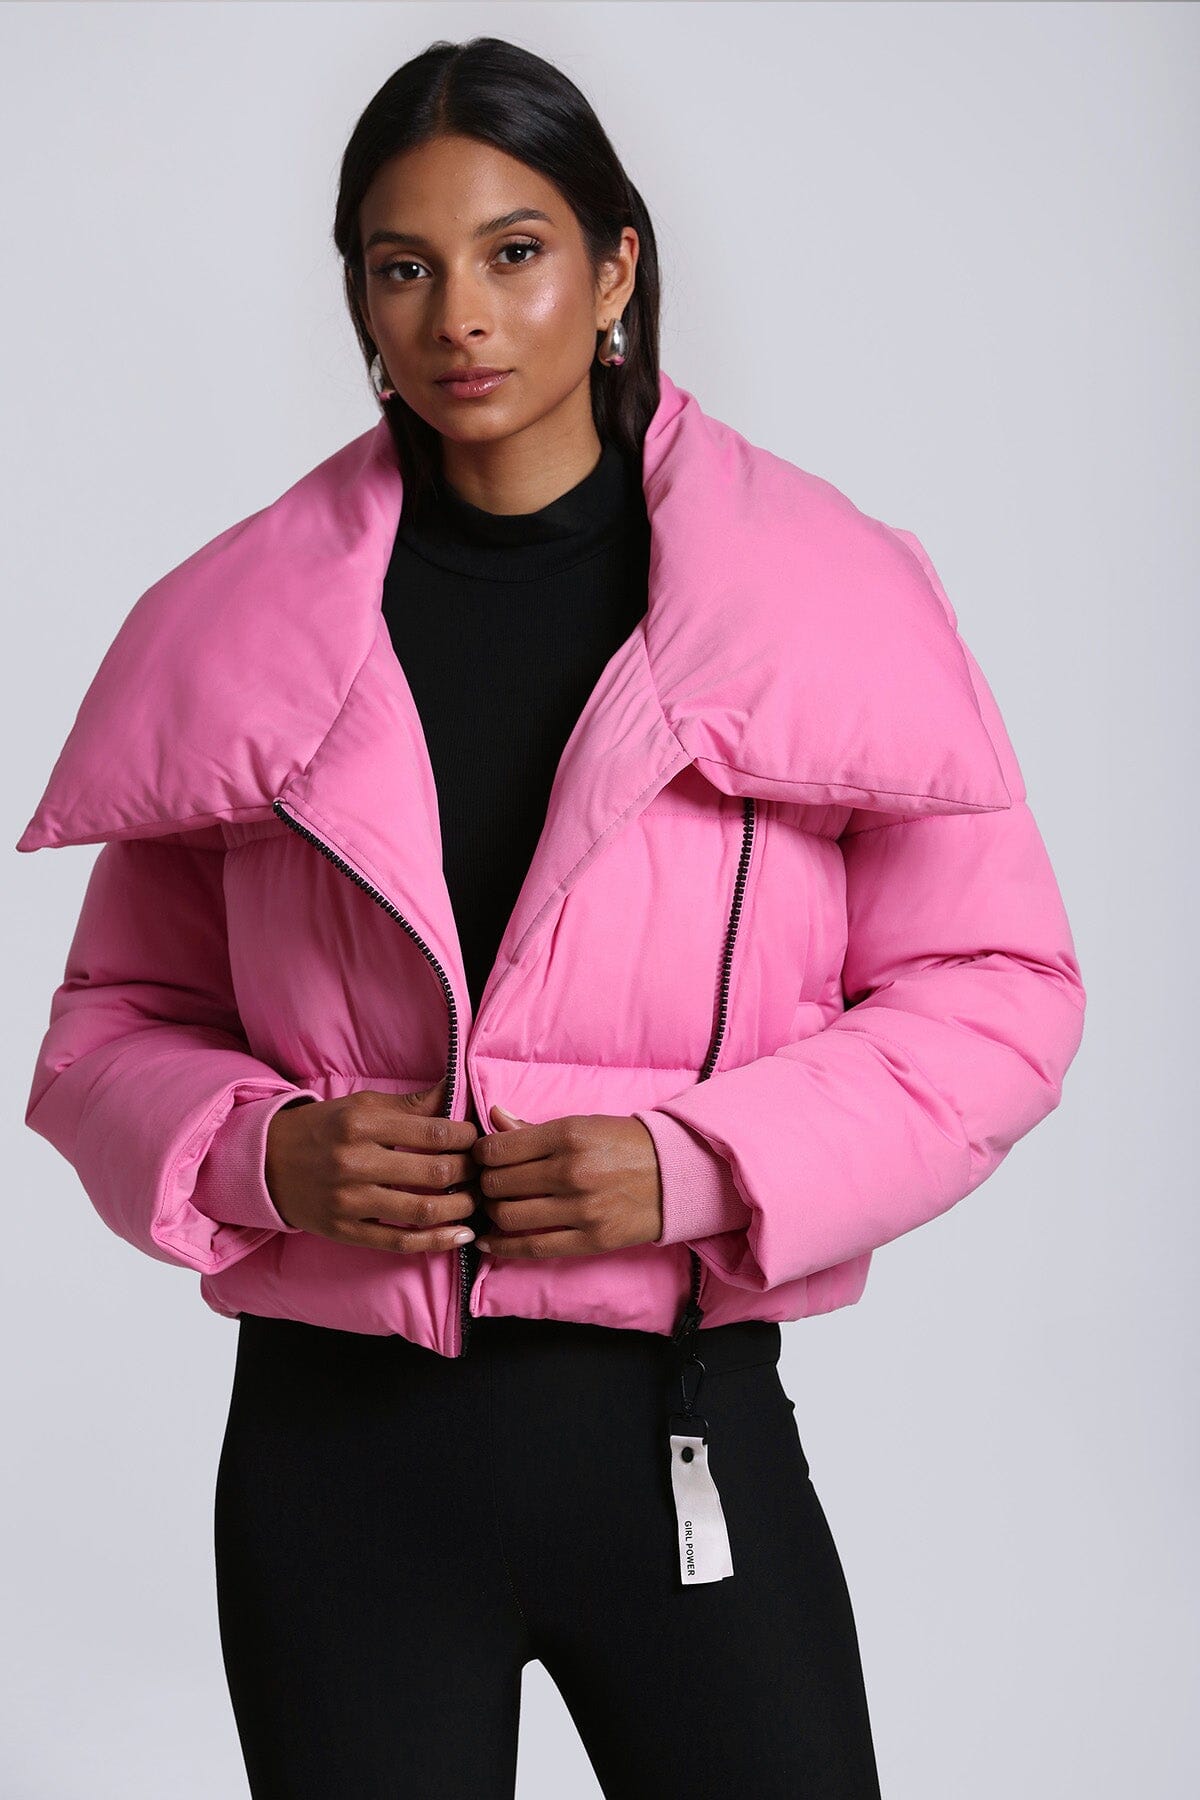 Thermal Puff Envelope Collar Knit Cropped Puffer Coat Jacket Hot Pink - Figure Flattering Designer Fashion Coats Jackets for Women